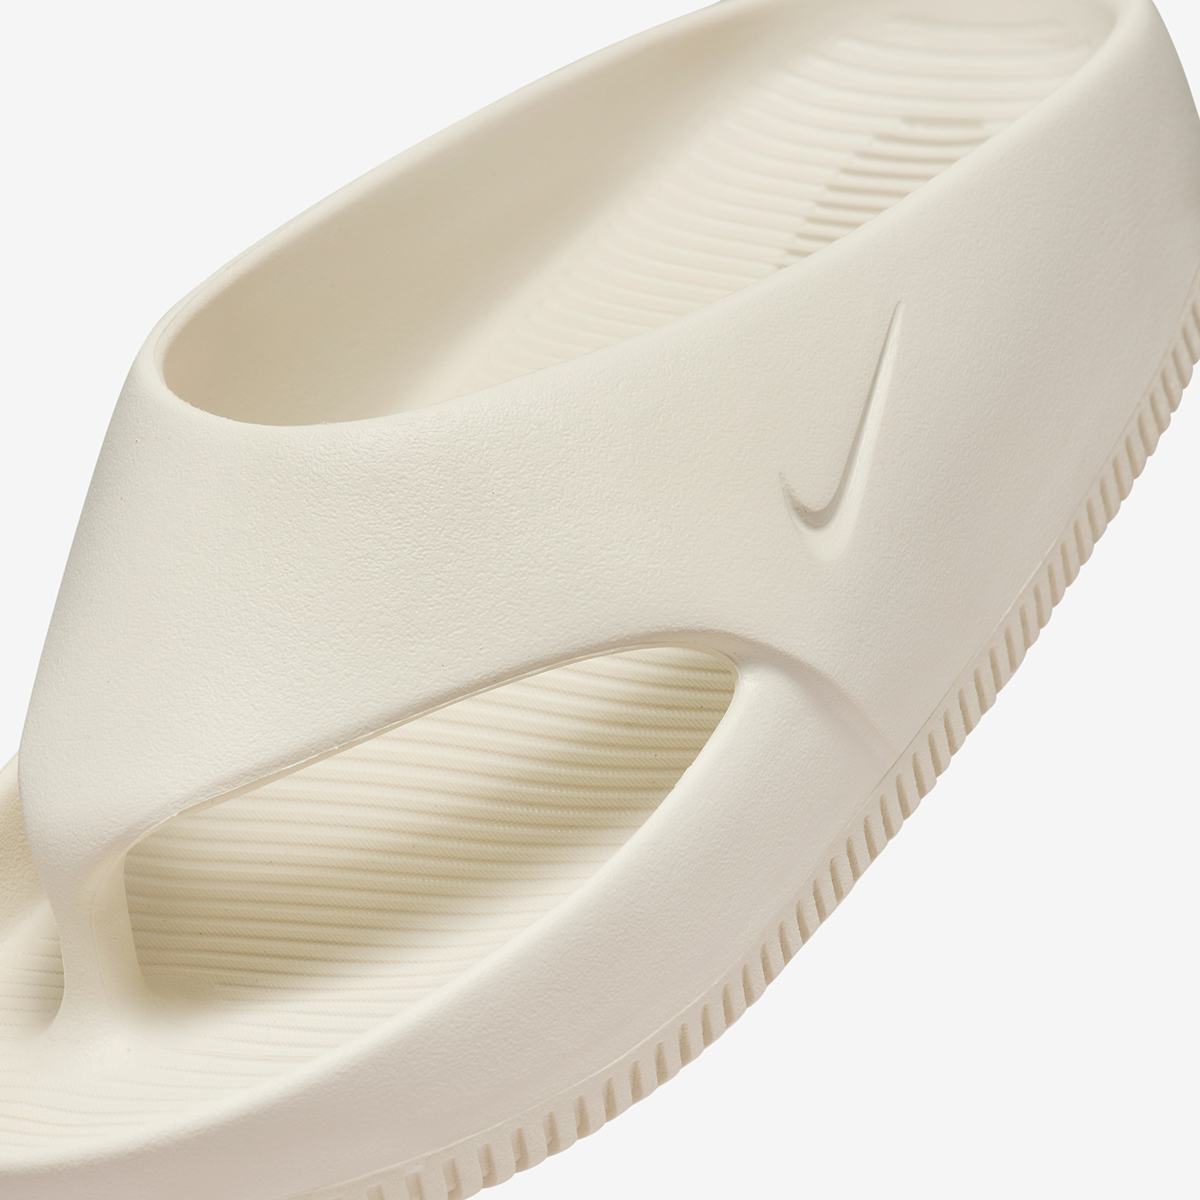 Nike Calm Flip Flop Release Date